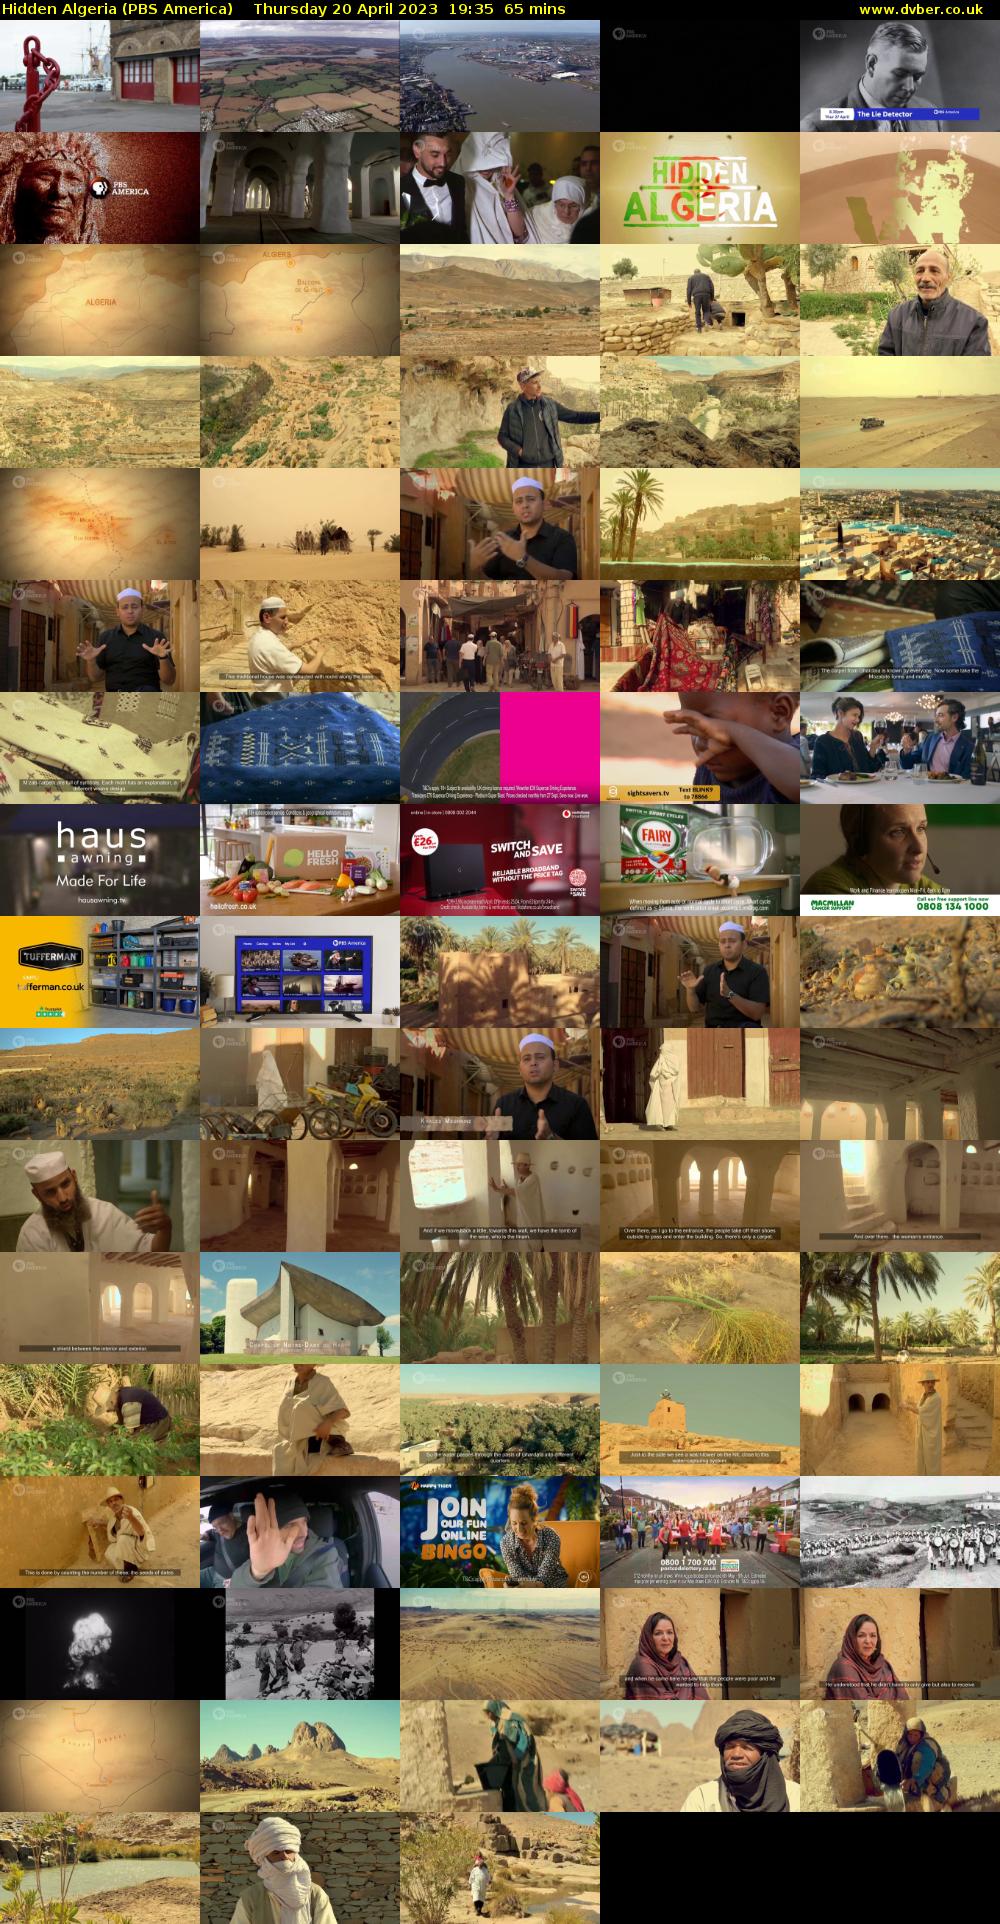 Hidden Algeria (PBS America) Thursday 20 April 2023 19:35 - 20:40